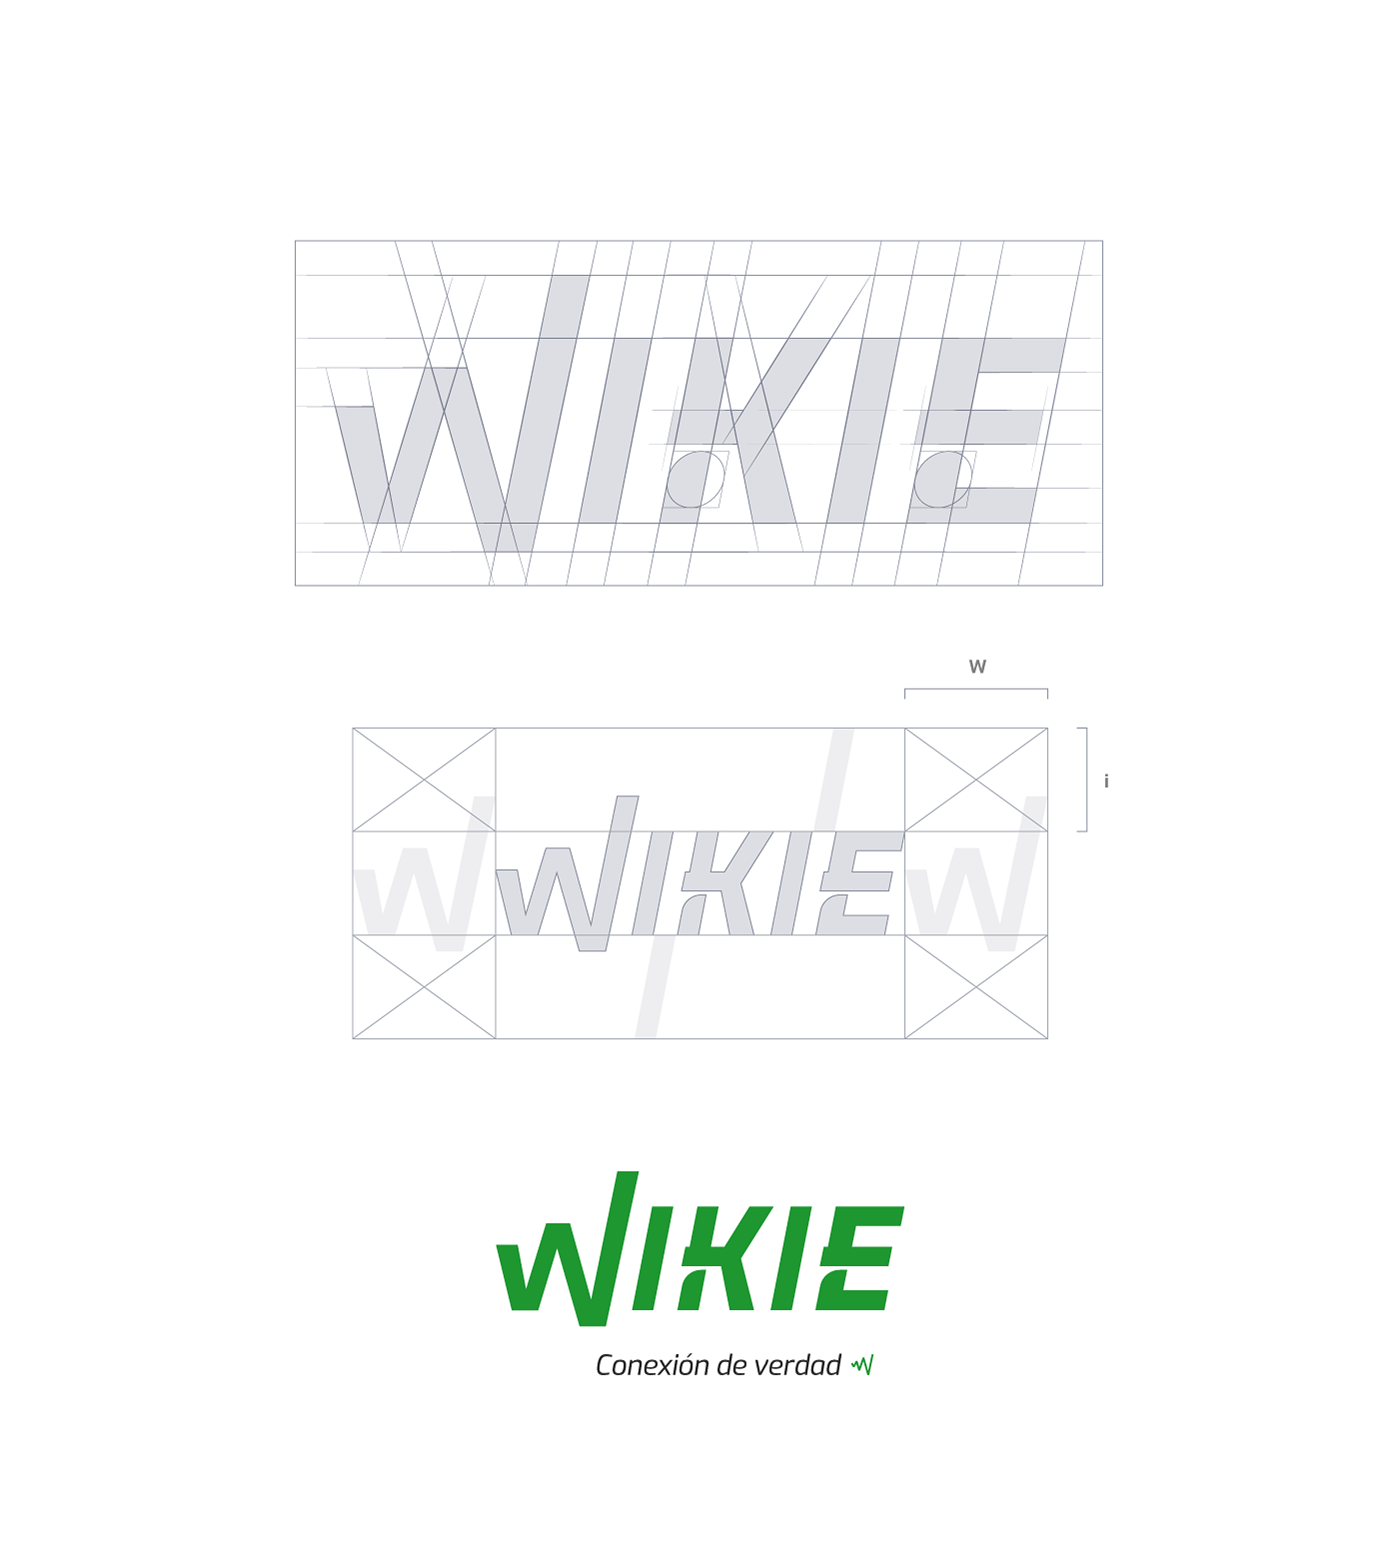 Brand Design brand identity branding  identidade visual visual identity fiber optic Internet internet provider propagation internet wikie